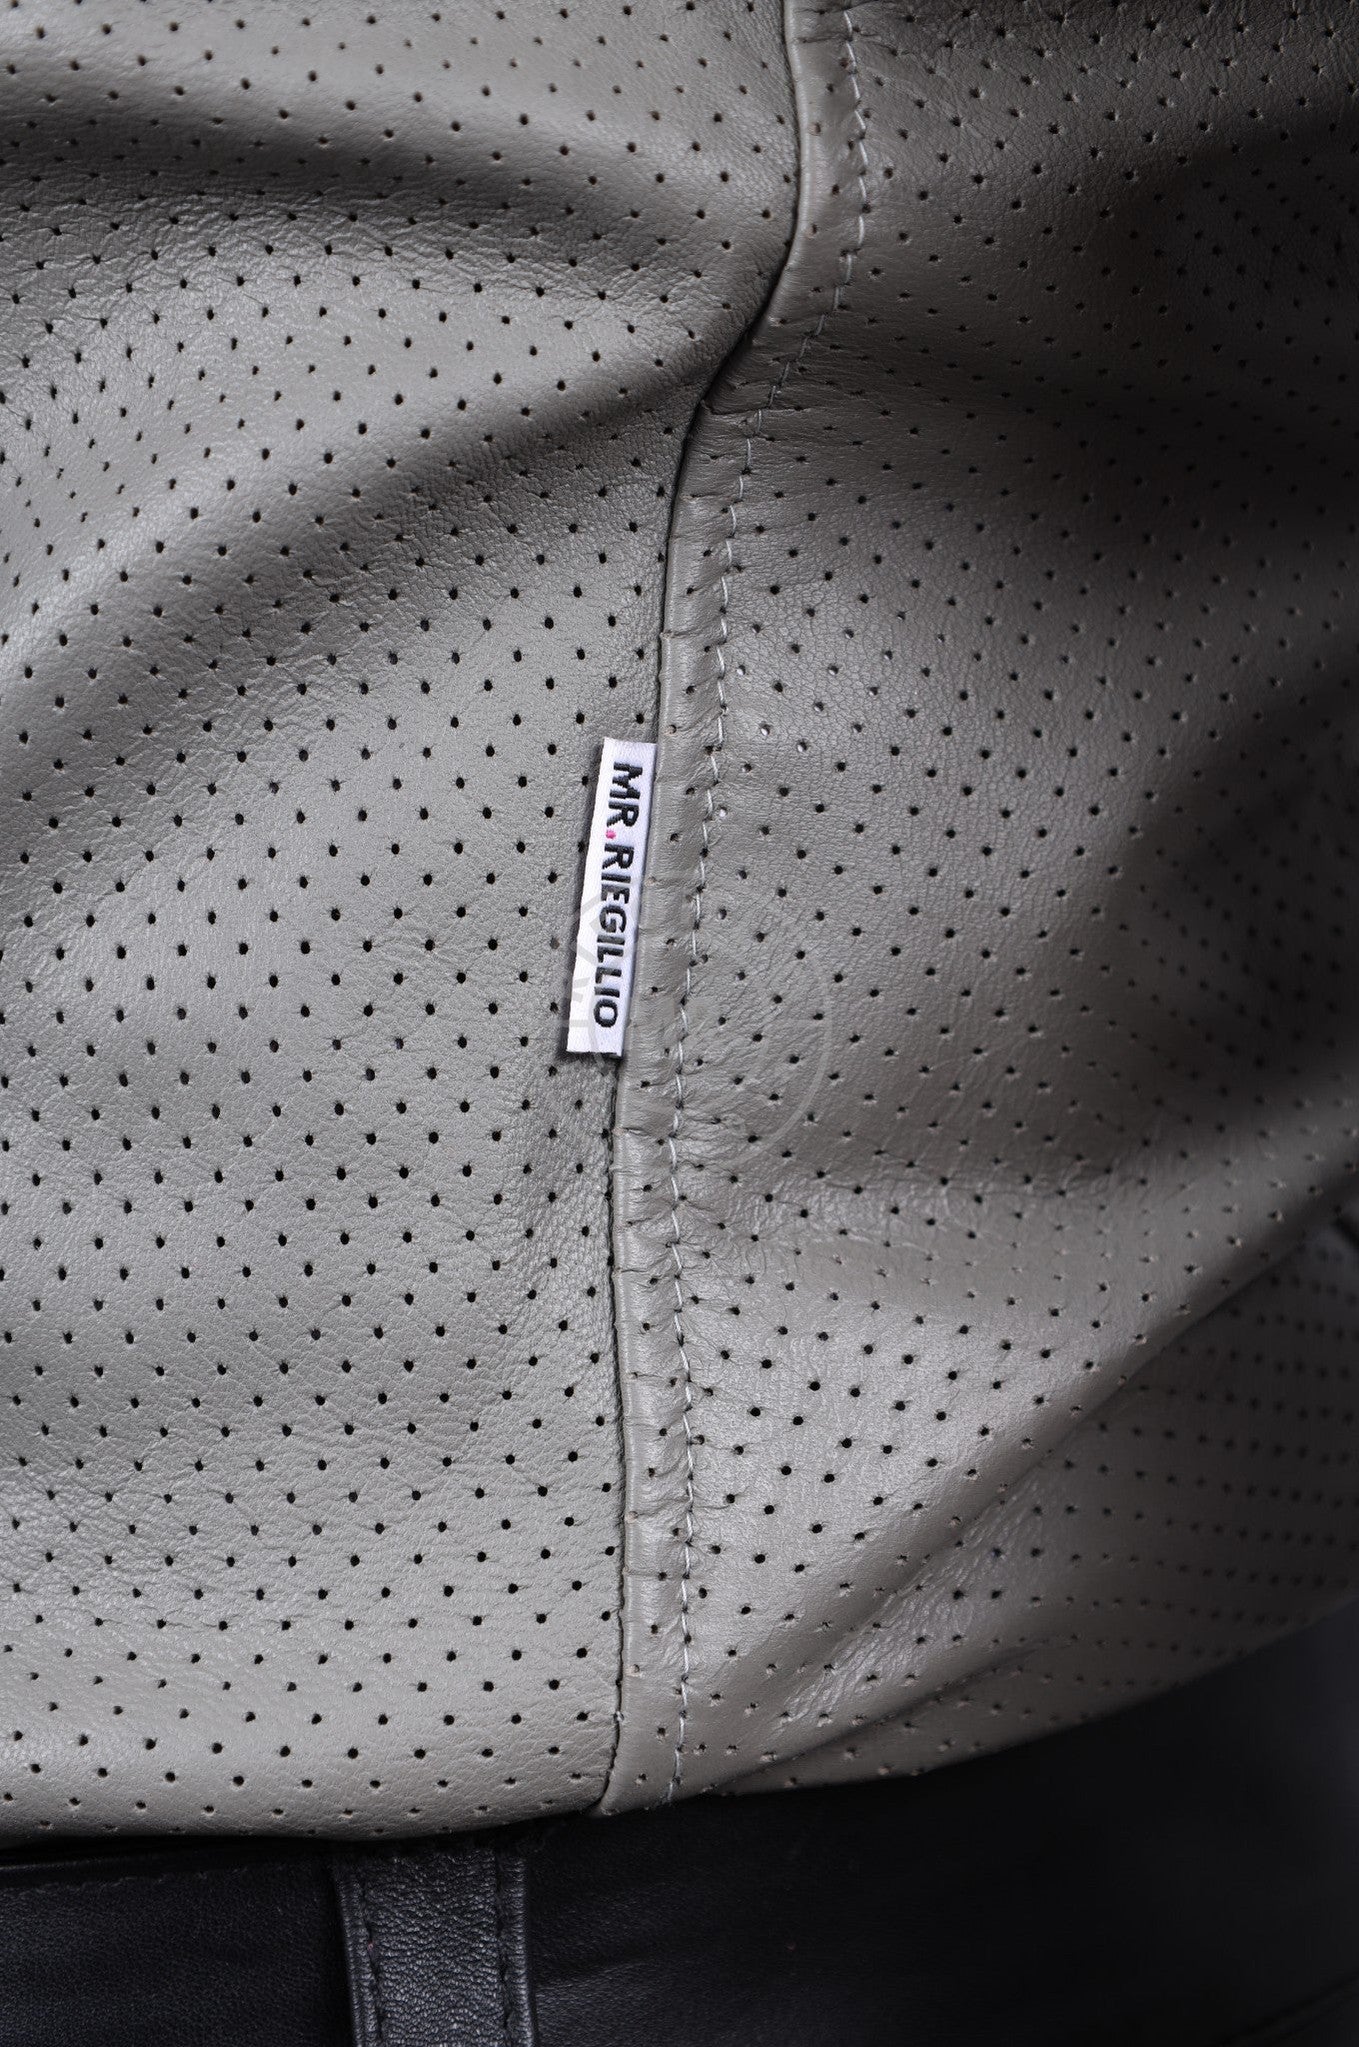 Ash Grey Leather Perforated Shirt-at MR. Riegillio